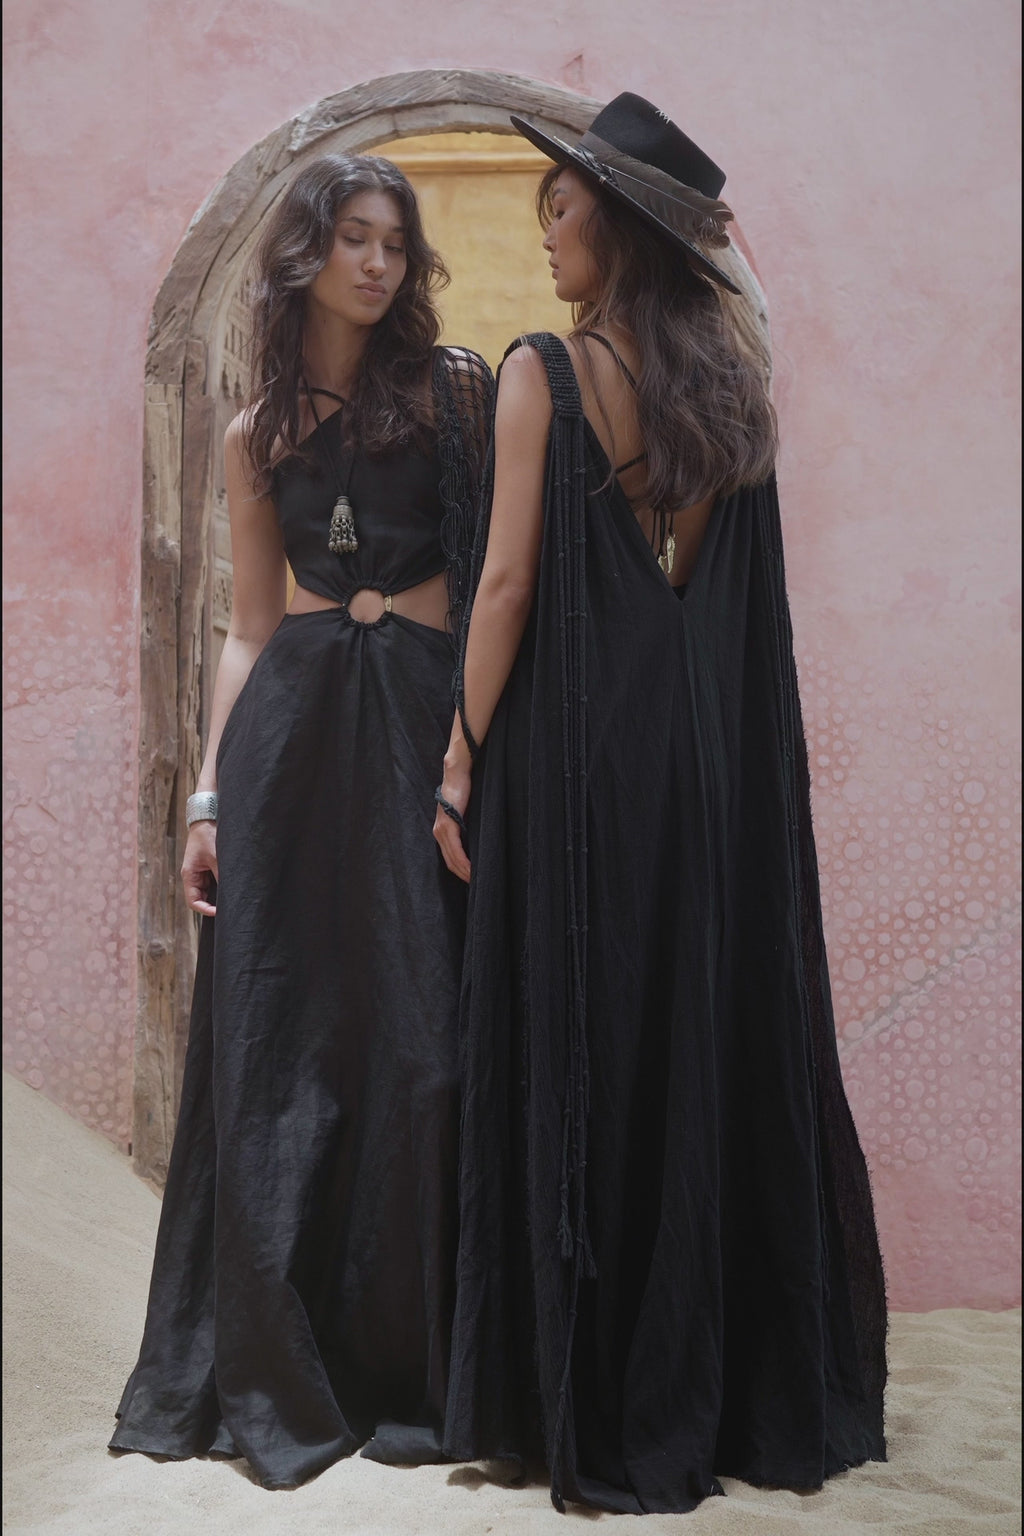 Aya Sacred Wear's Black Goddess Dress: Look and Feel like a Goddess